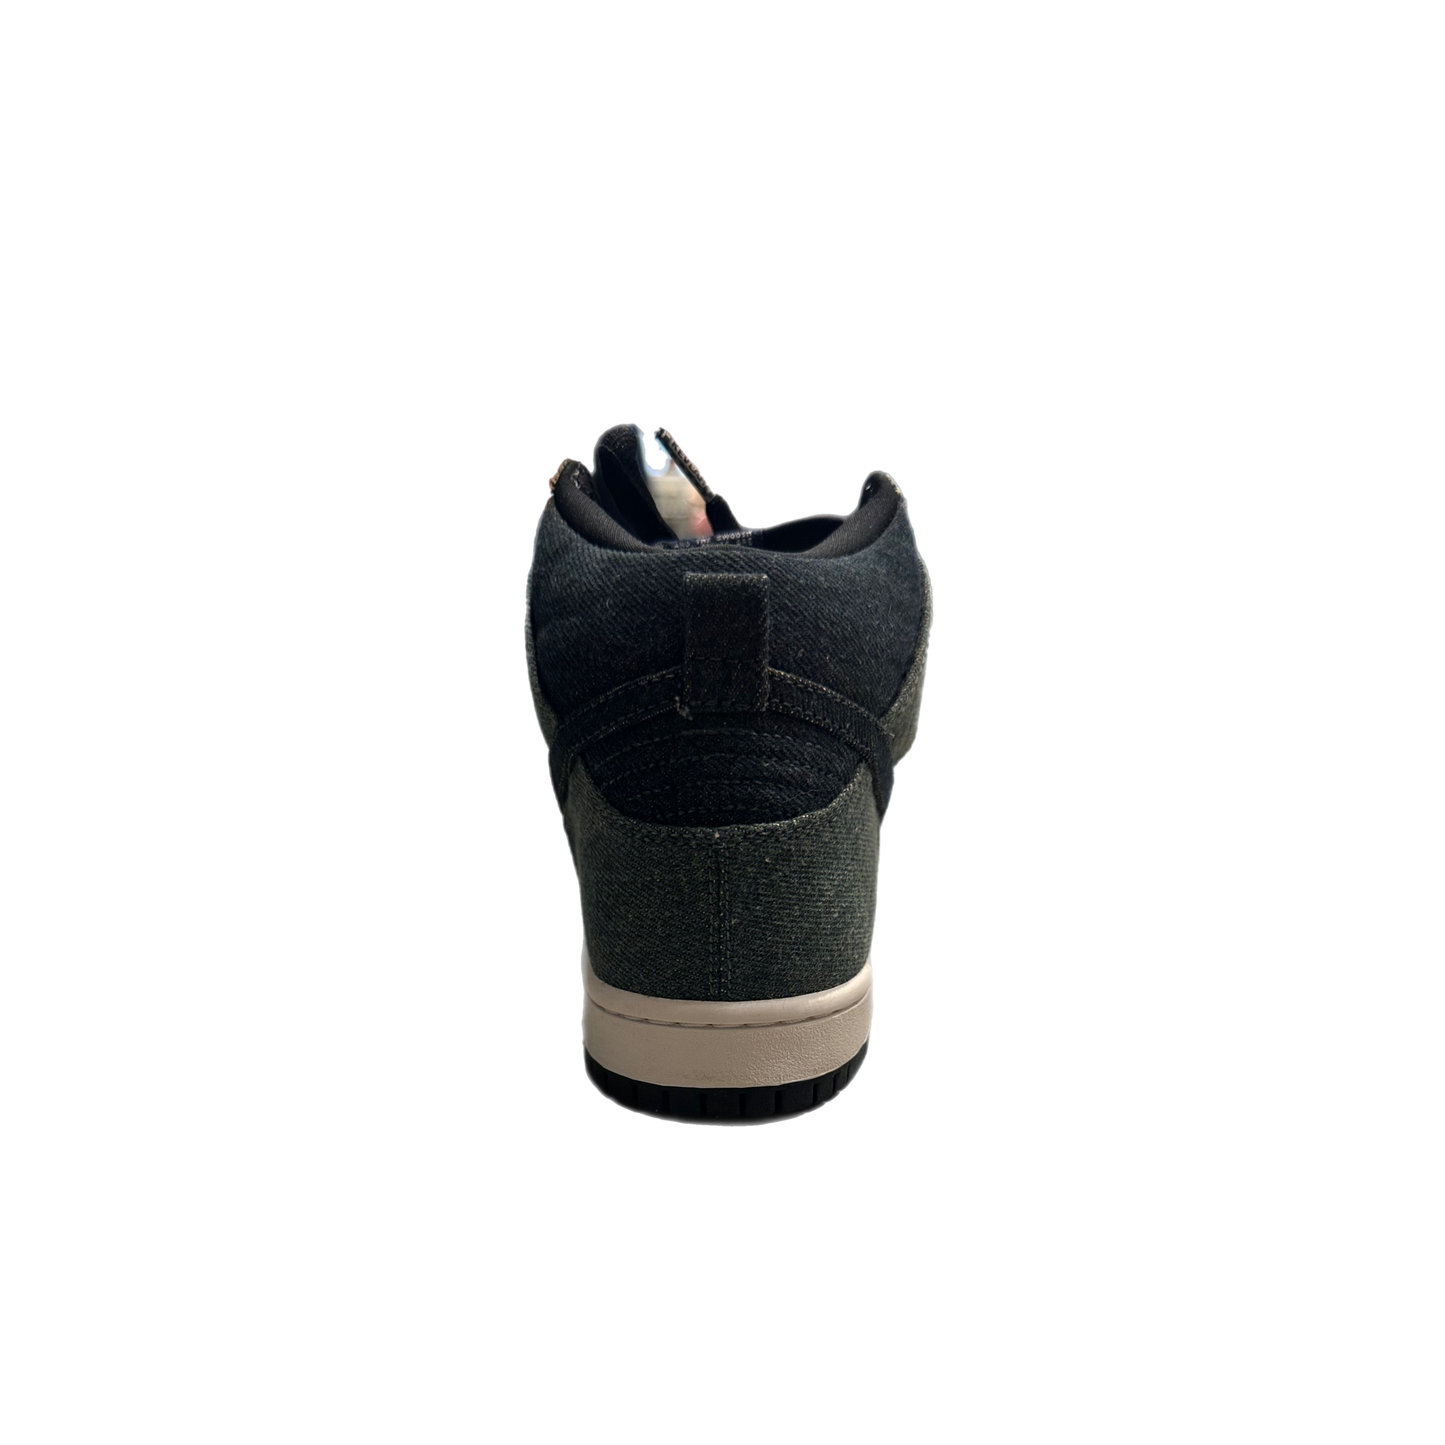 Nike - "SB Dunk High Navy Obsidian" - Size 6.5